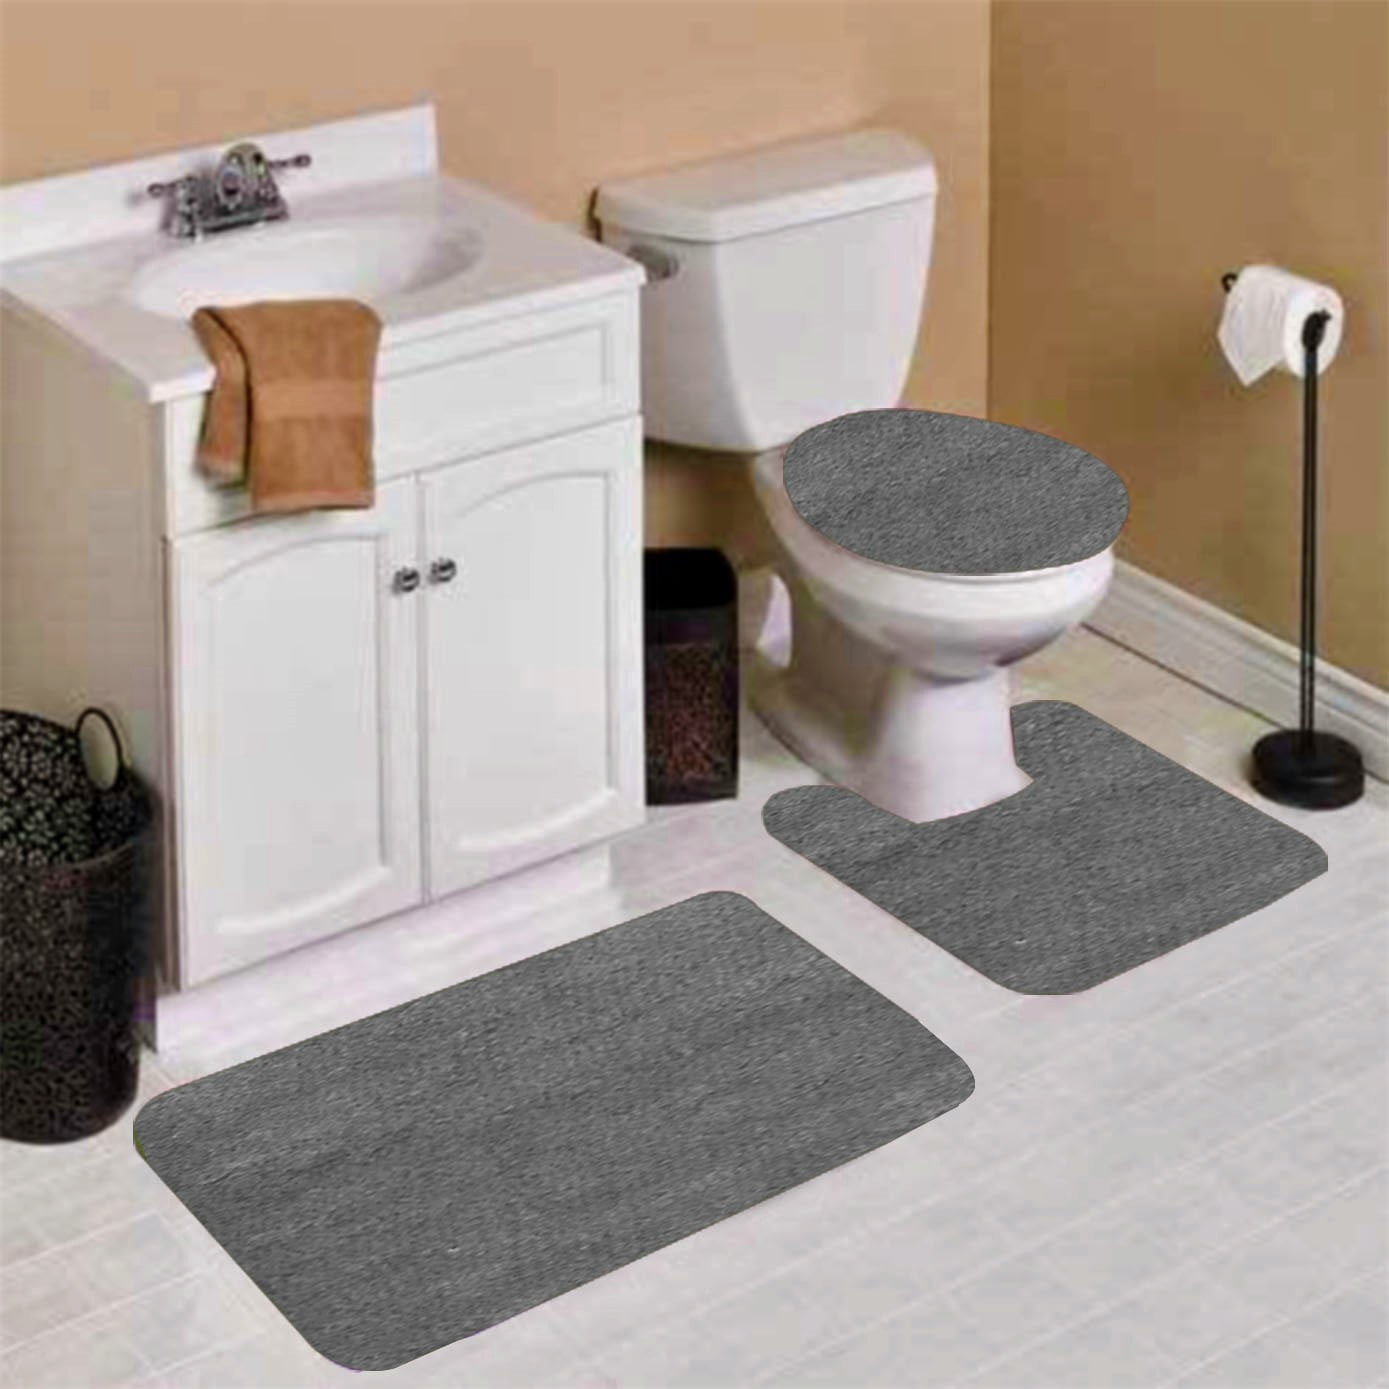 Animal Print Bathroom Mat 3pcs Soft Durable Floor Carpet Rug Toilet Seat Cover 